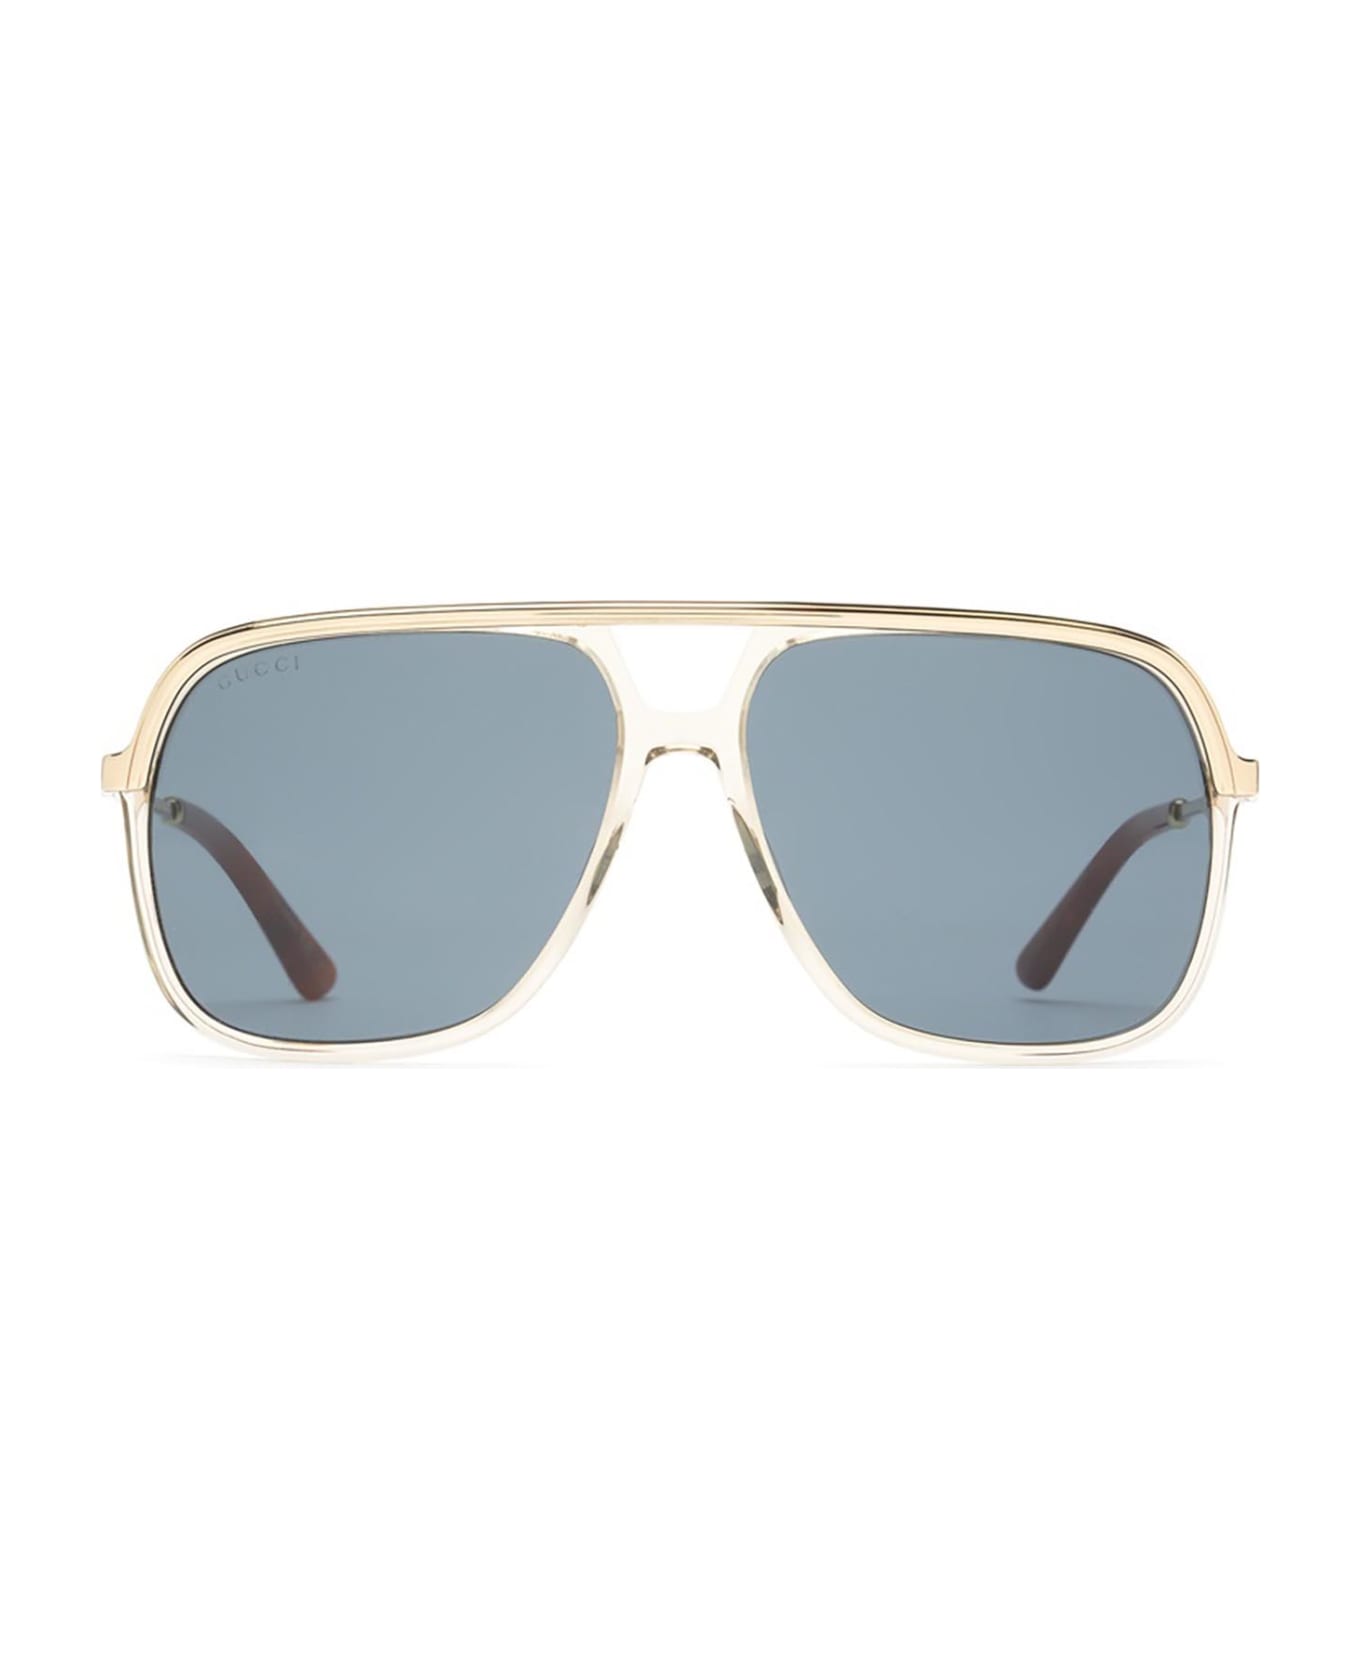 Gucci Eyewear Gg0200s Transparent Brown Sunglasses - Transparent Brown